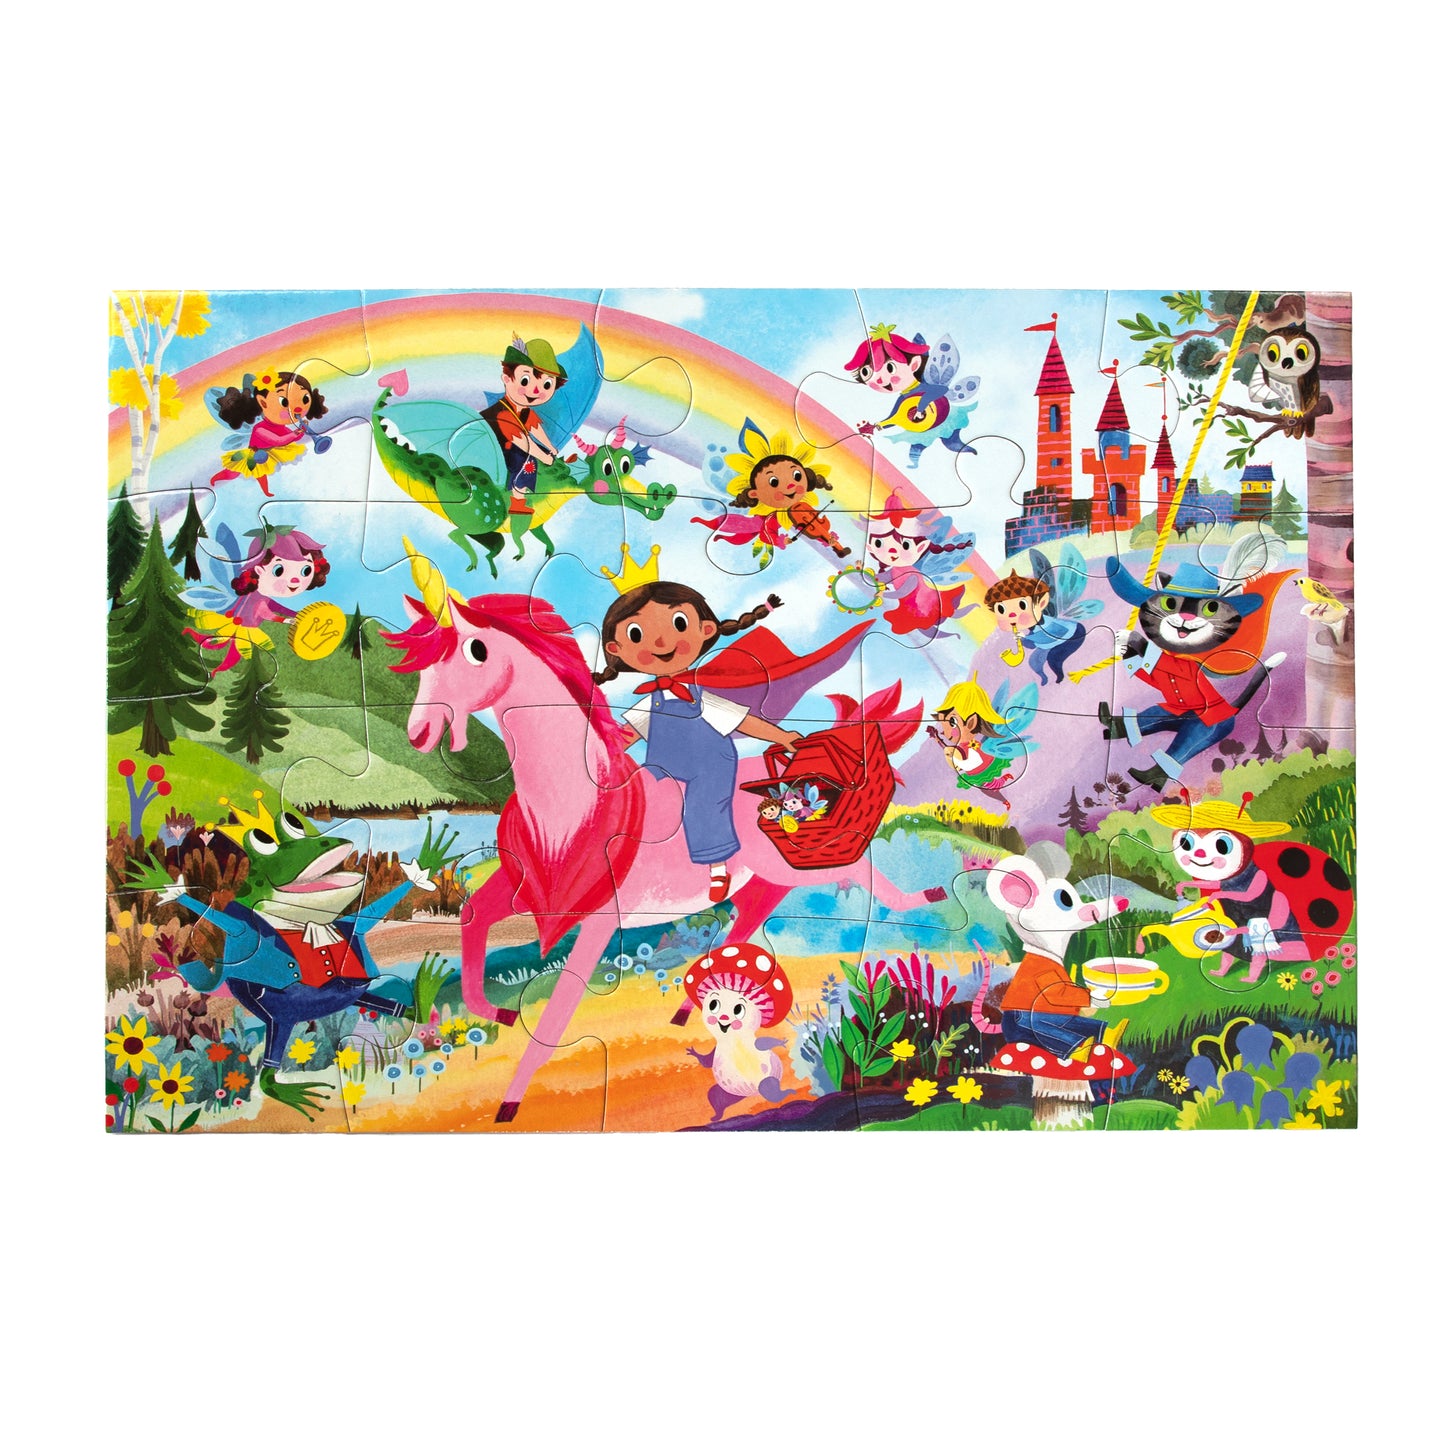 Fairytale 20 Piece Jigsaw Puzzle by eeBoo | Unique Fun Gifts